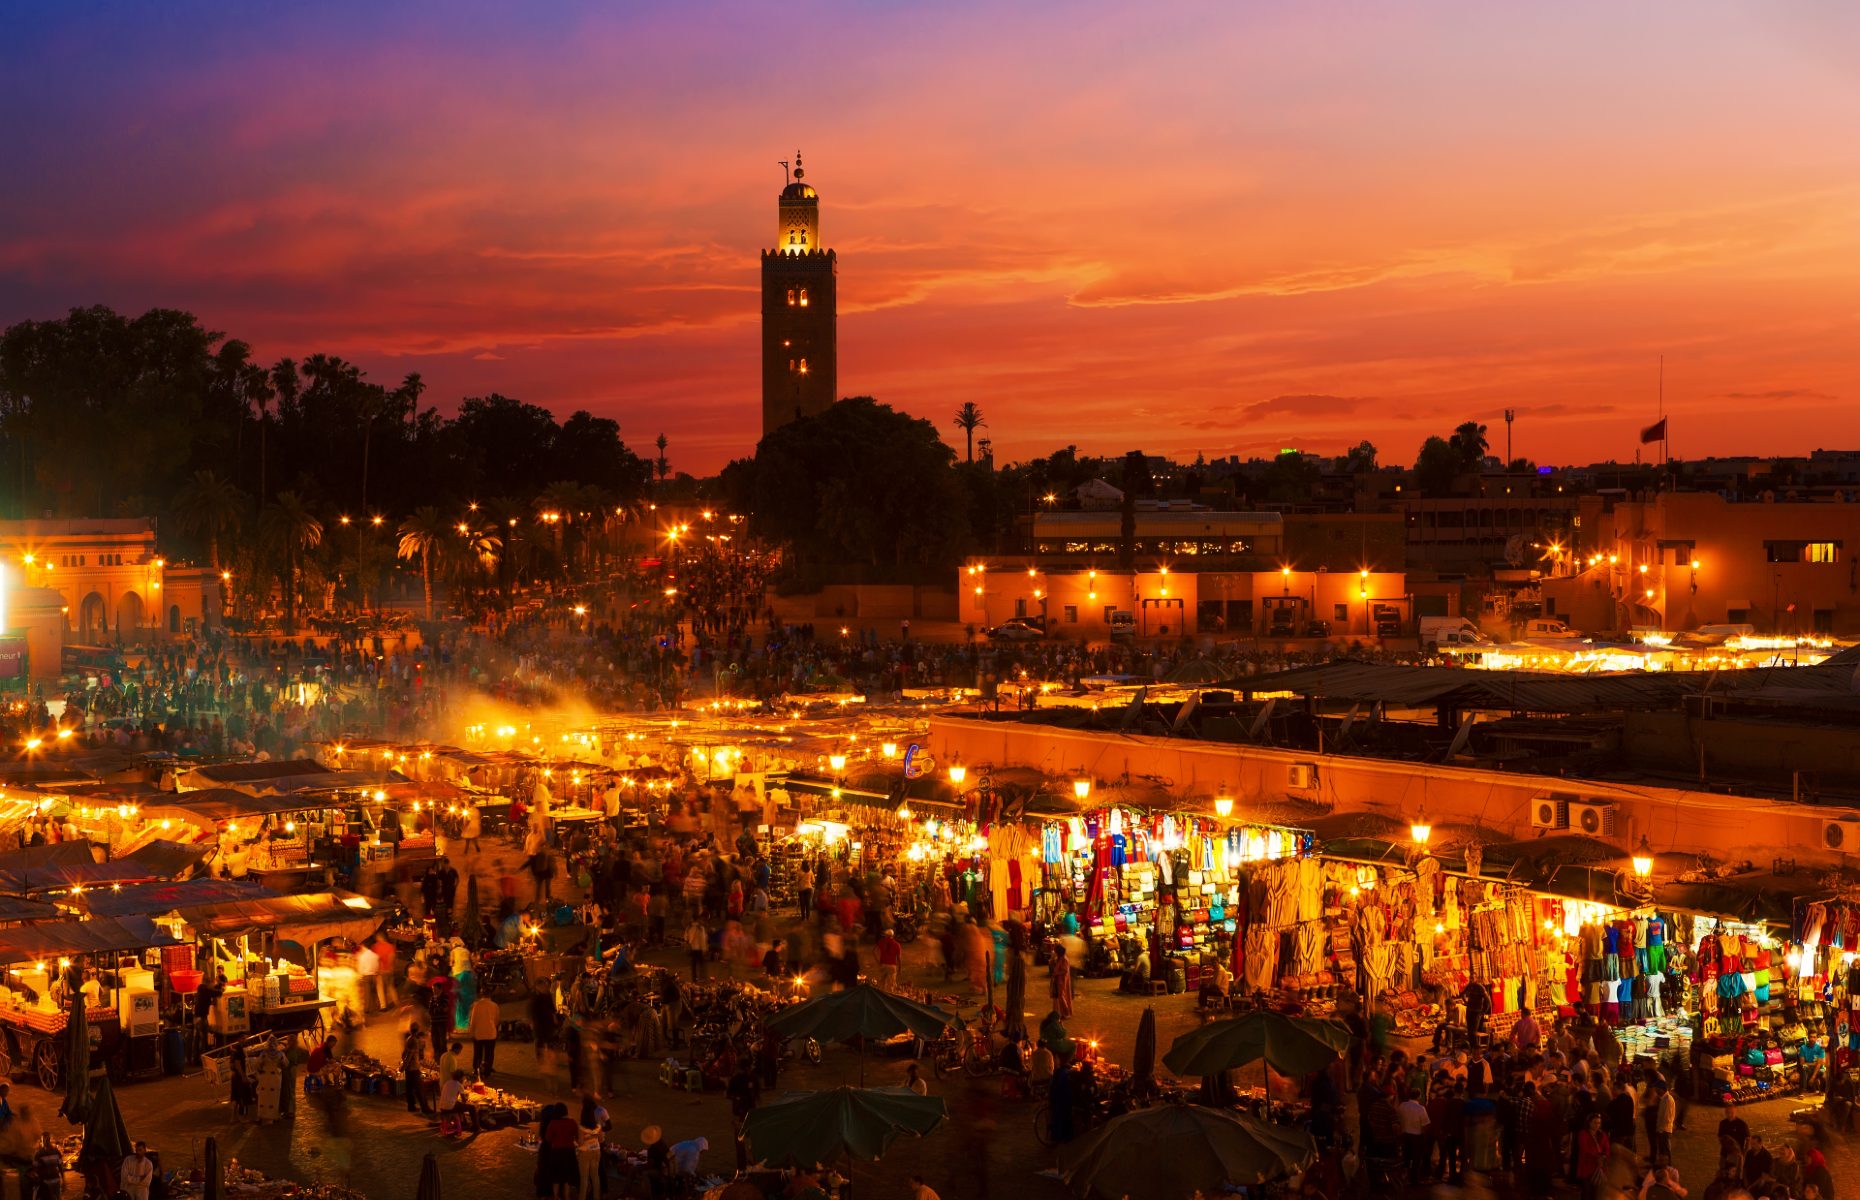 Marrakech, Morocco (Image: Marrakech posztos/Shutterstock)